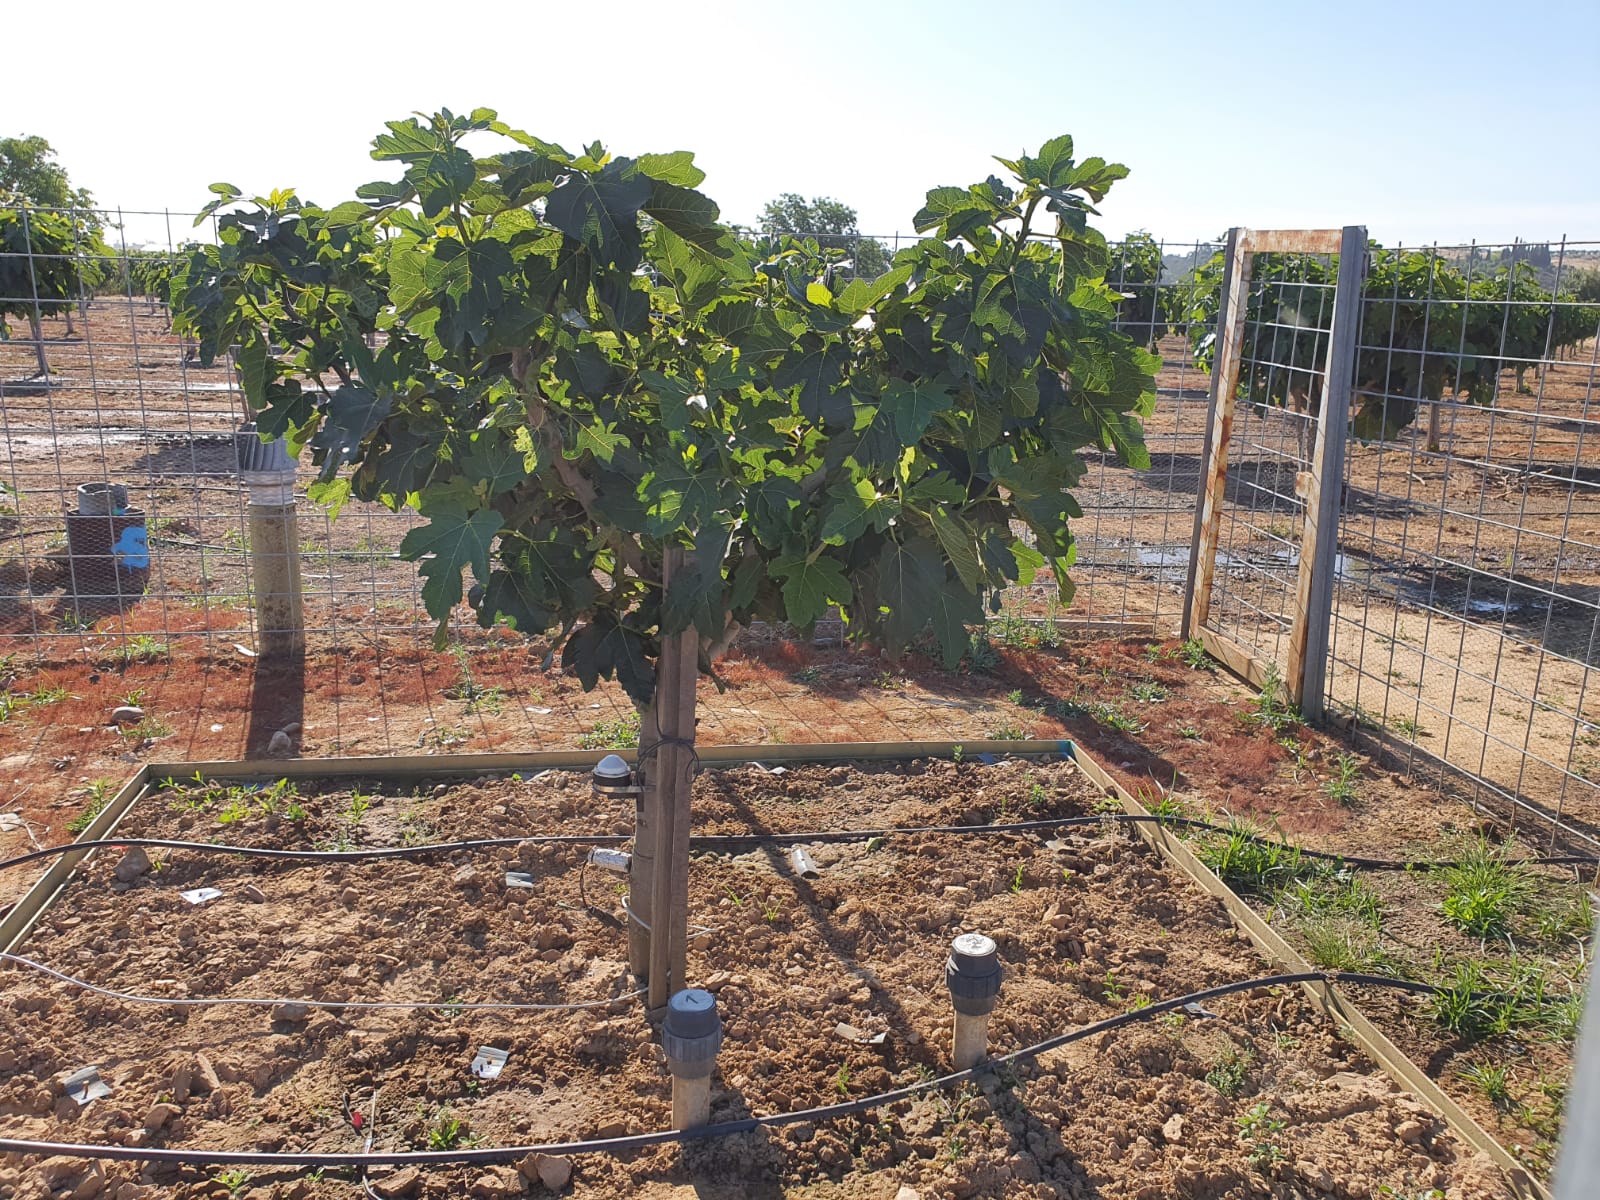 Fig tree lysimeter with sensors to monitor water status